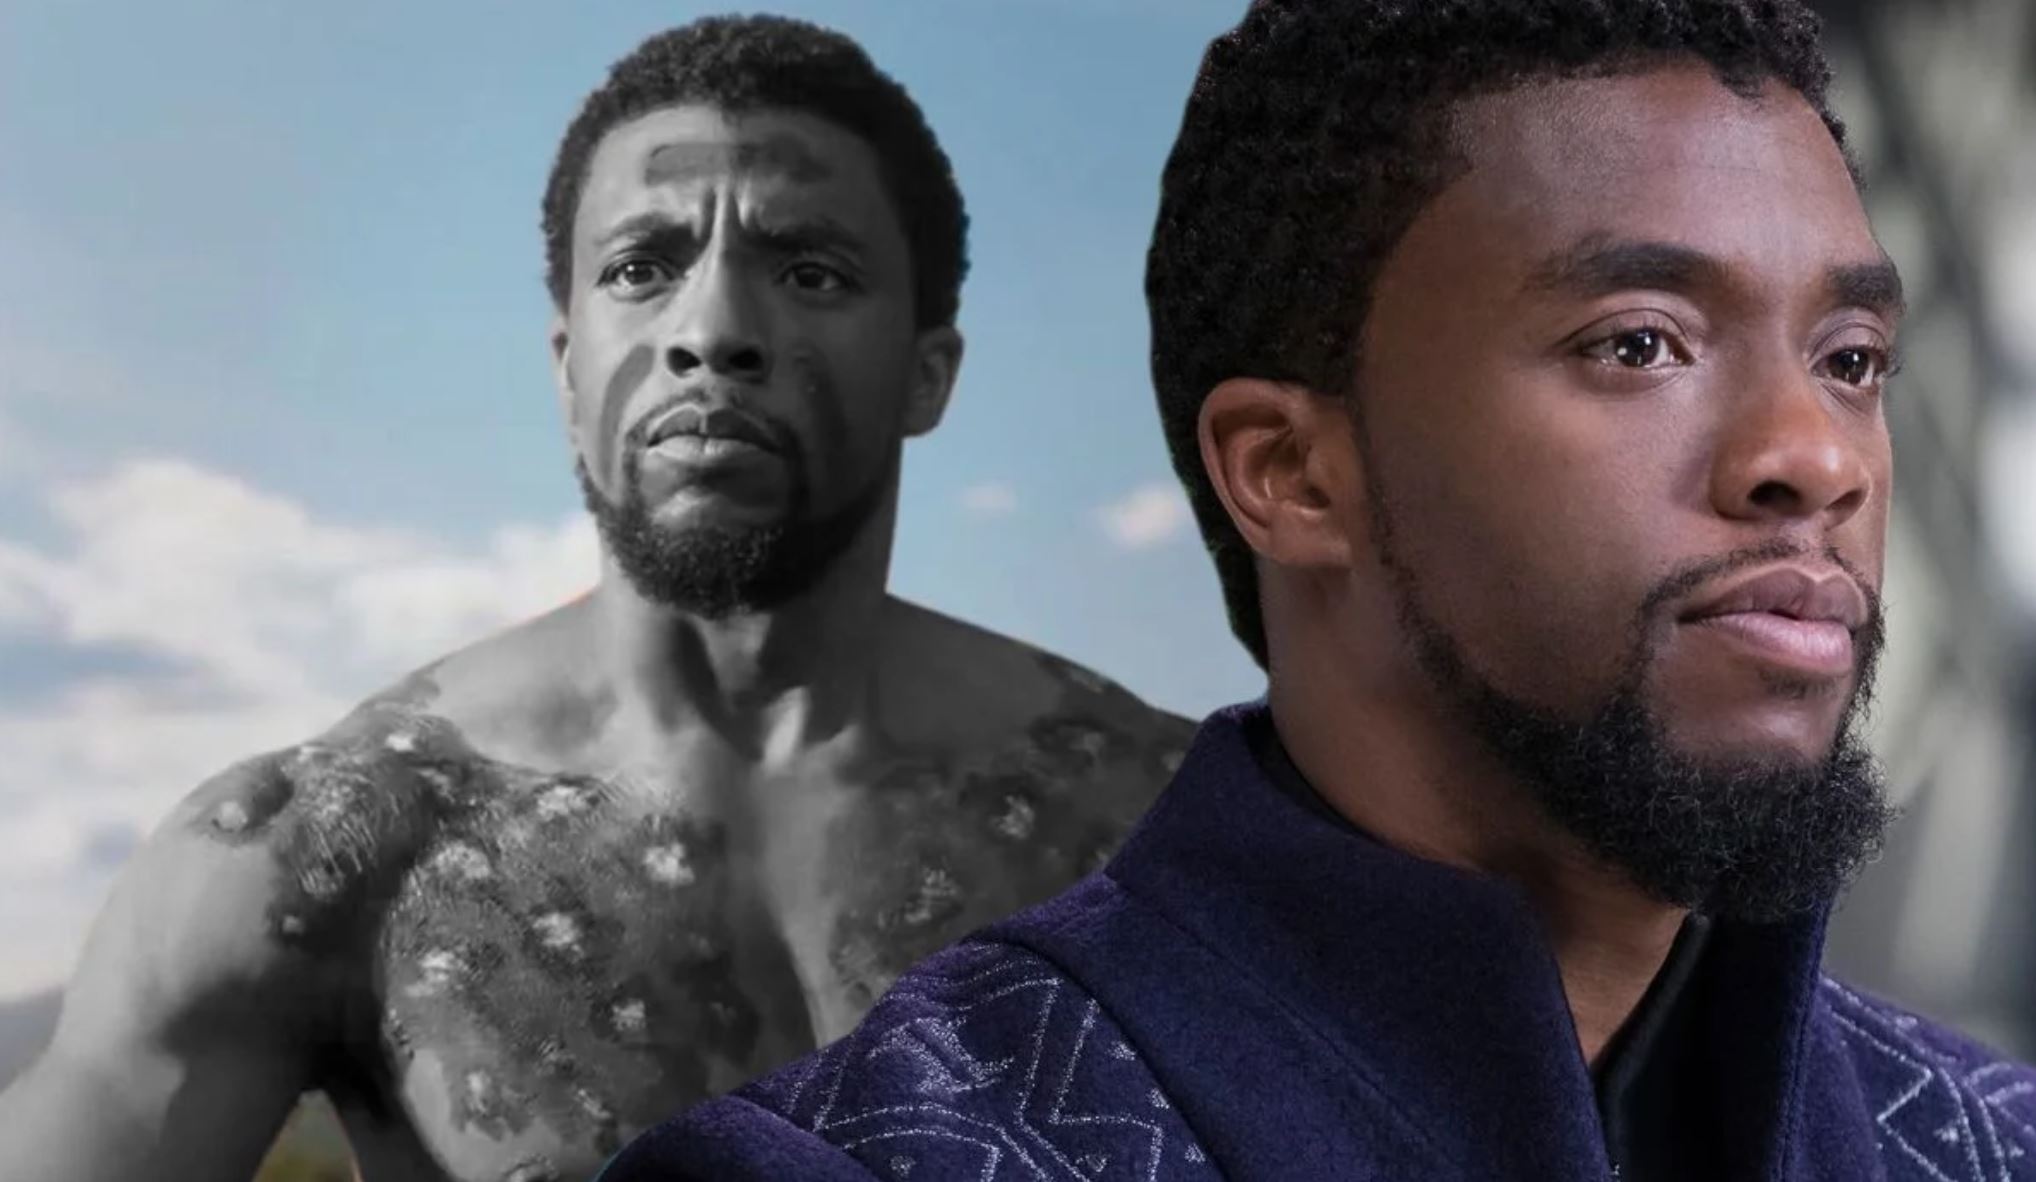 'Black Panther’ star, Chadwick Boseman is dead